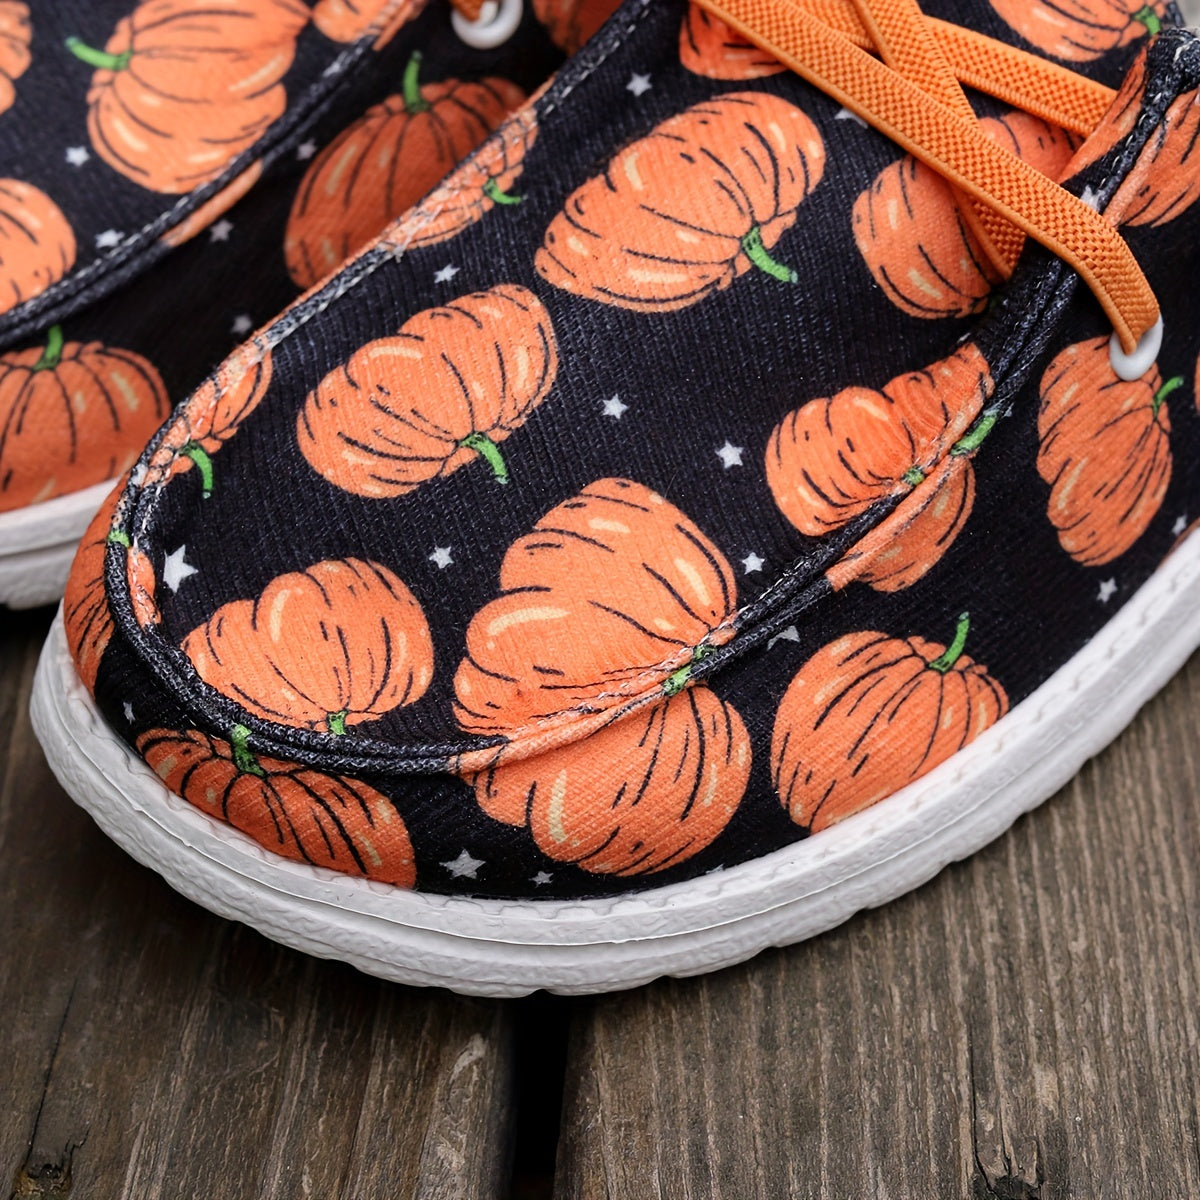 Pumpkin Pattern Canvas Shoes, Lace Up Low Top Flats